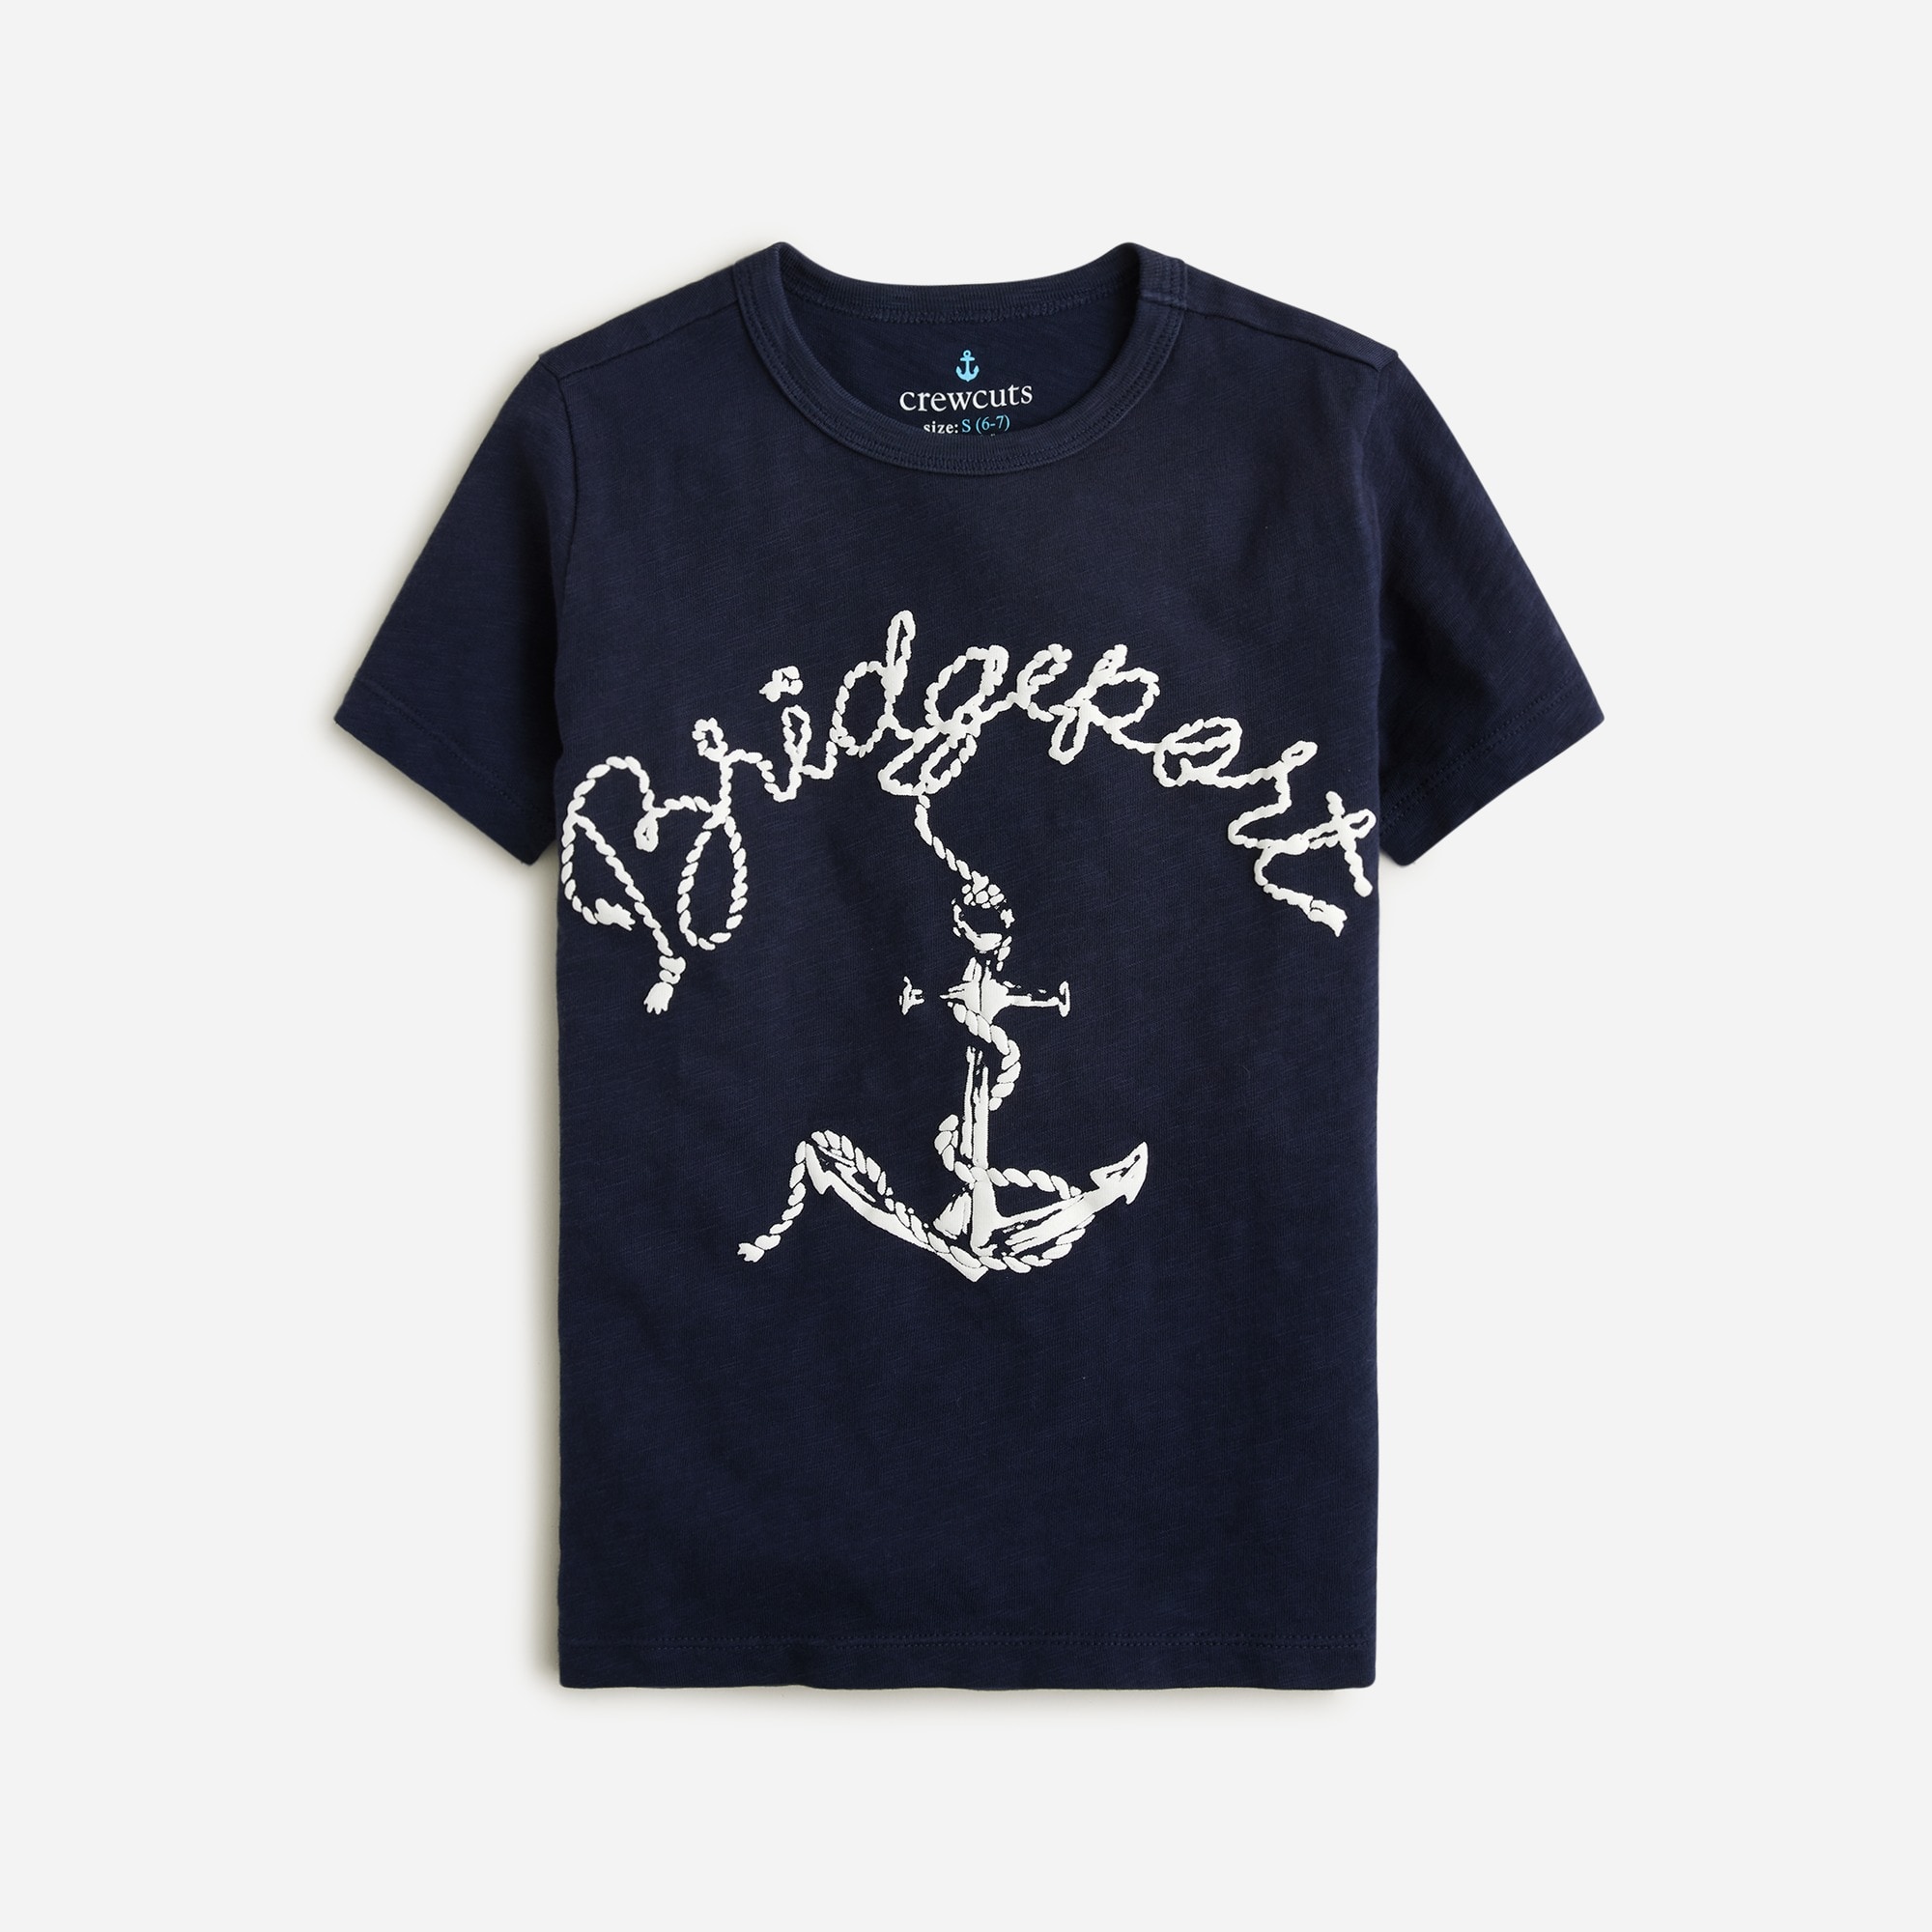 Jcrew Kids short-sleeve Bridgeport graphic T-shirt